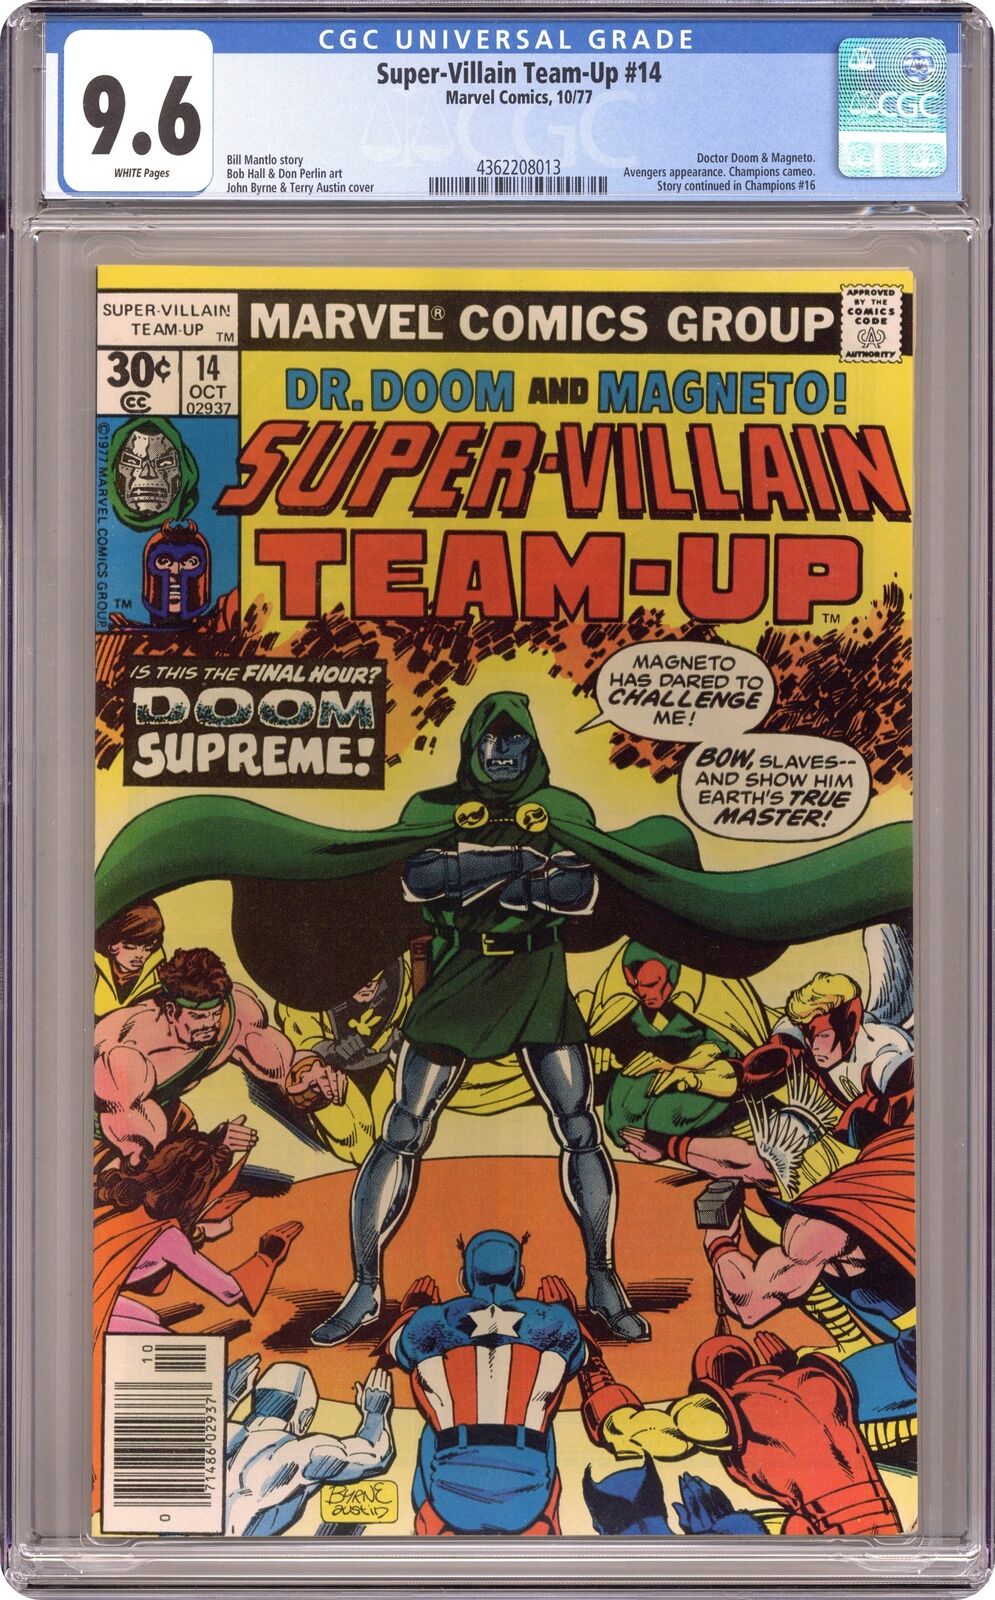 Super-Villain Team-Up #14 CGC 9.6 1977 4362208013